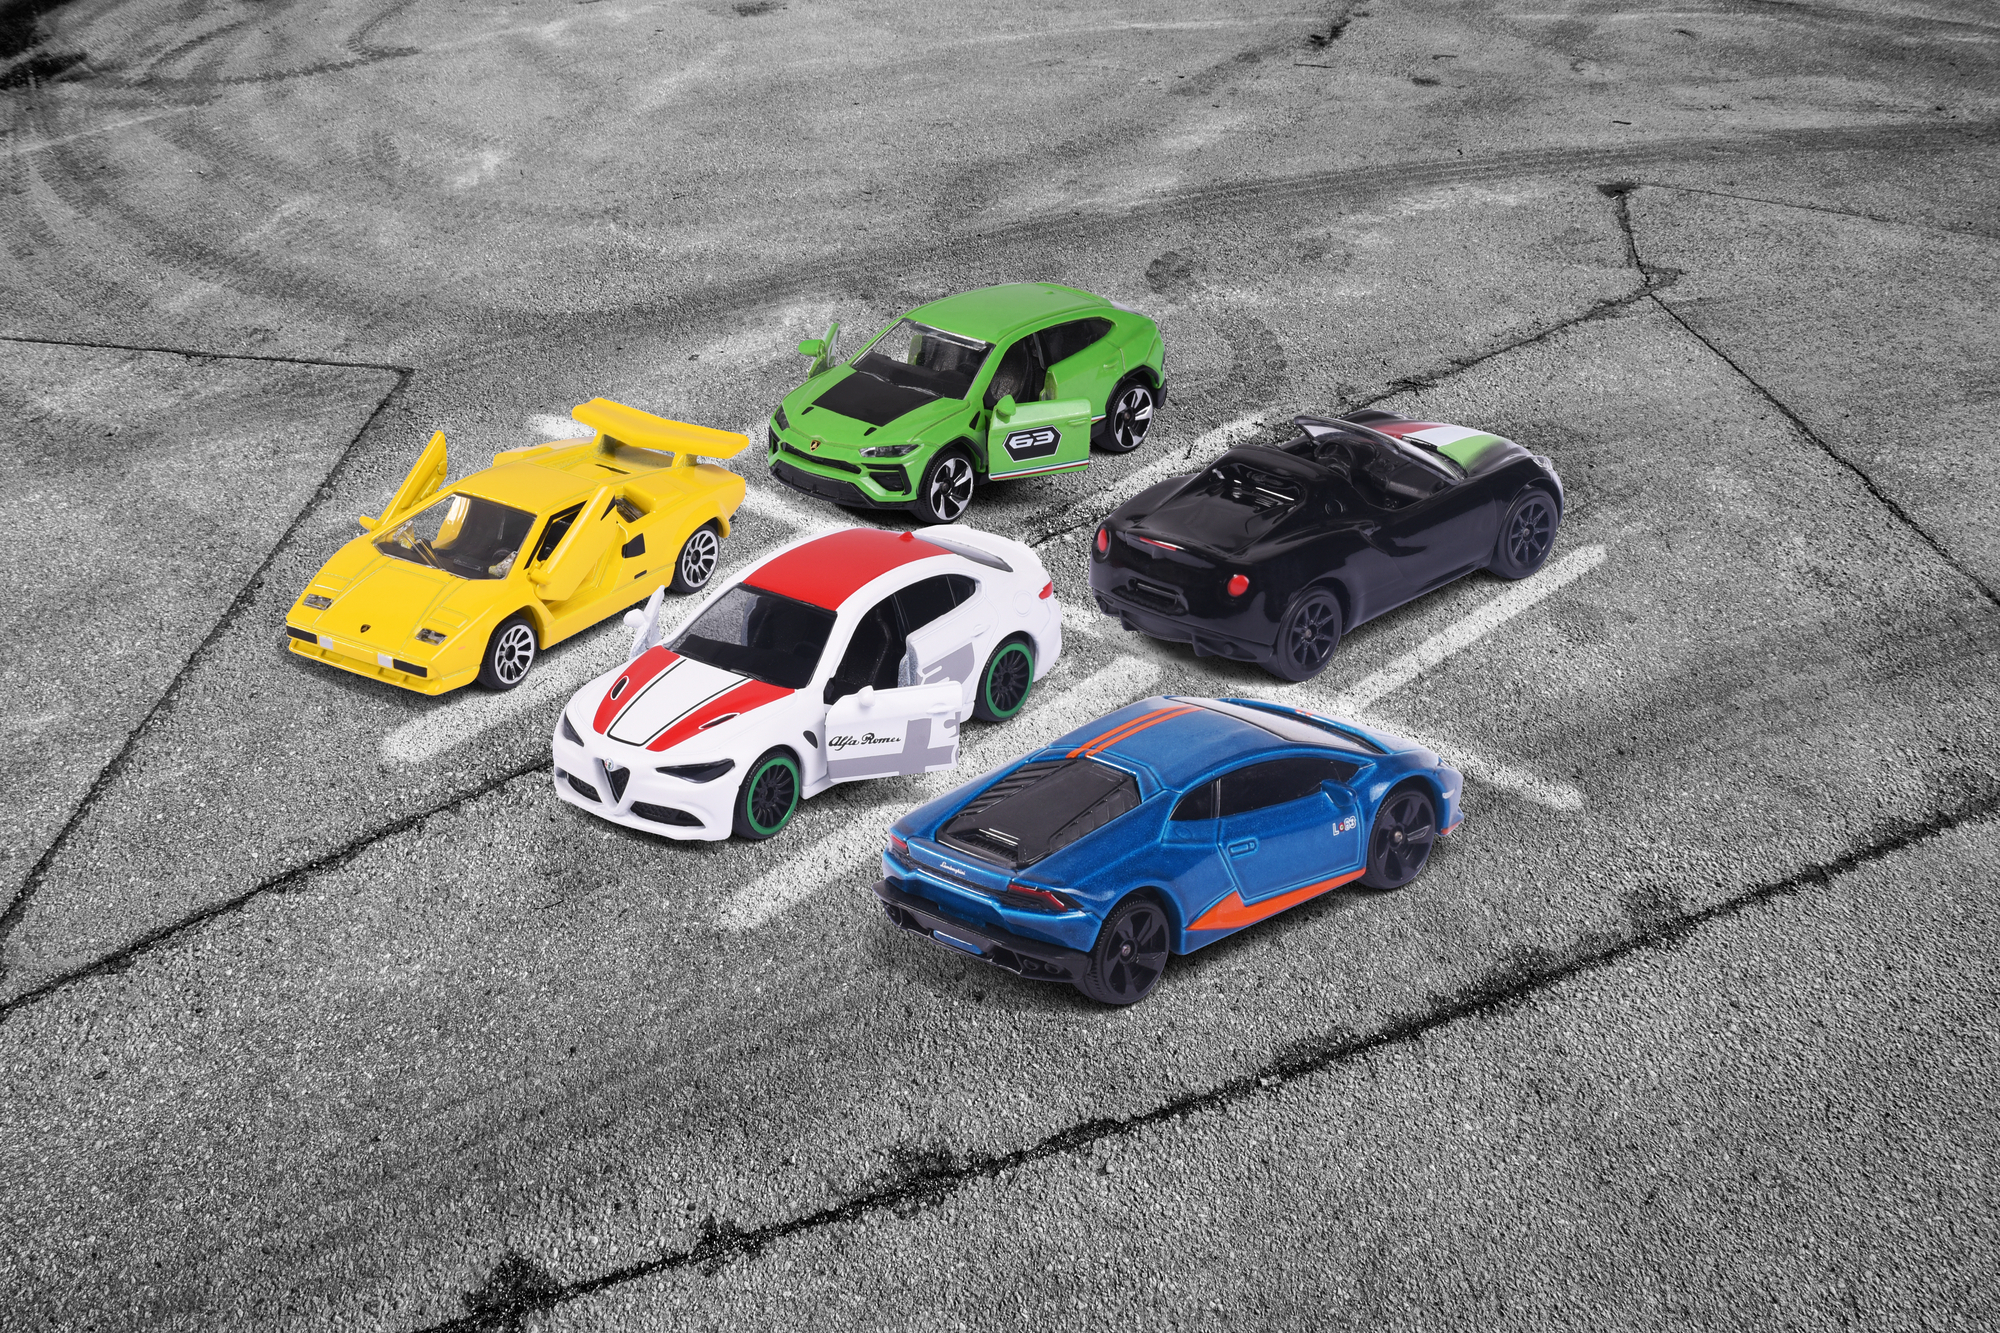 MAJORETTE Spielzeugauto Dream Italy Teile Cars Geschenkset 5 Mehrfarbig